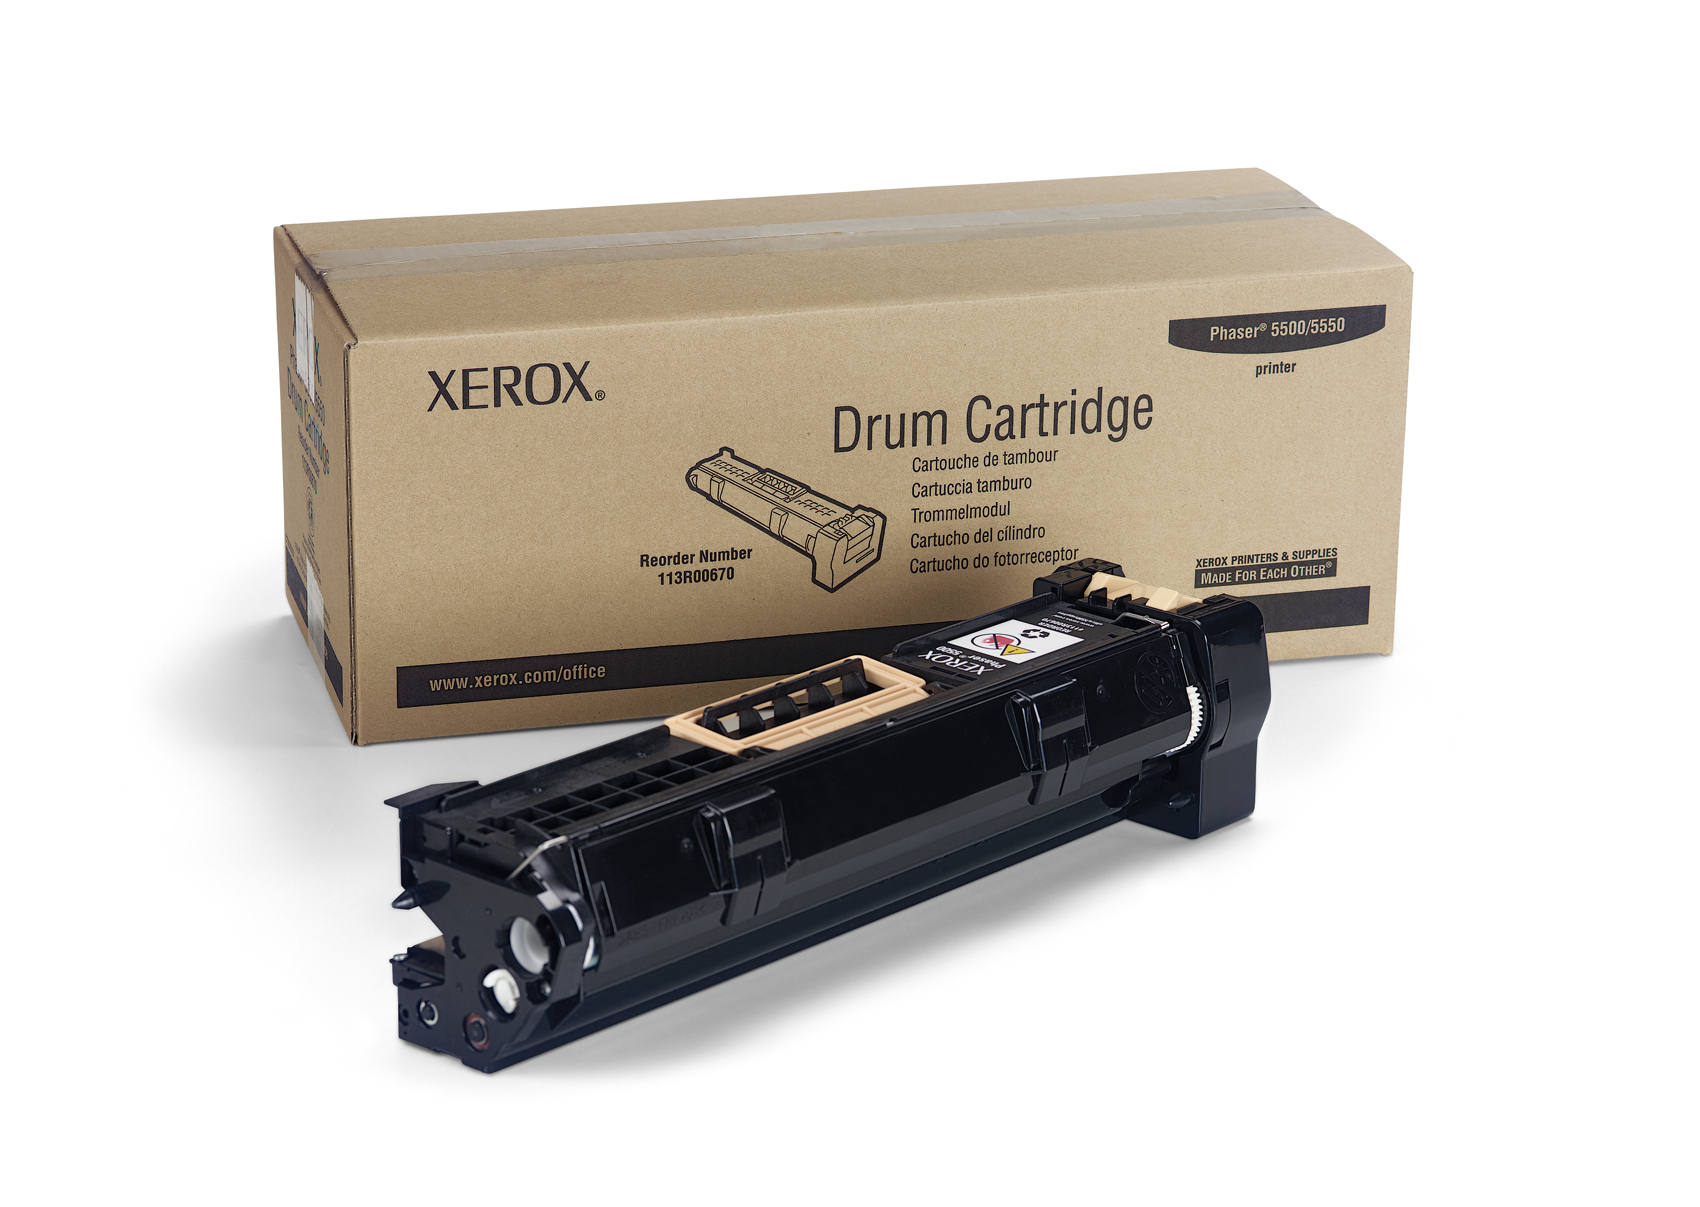 Xerox Phaser 5500/5550 Drum Cartridge 113R00670